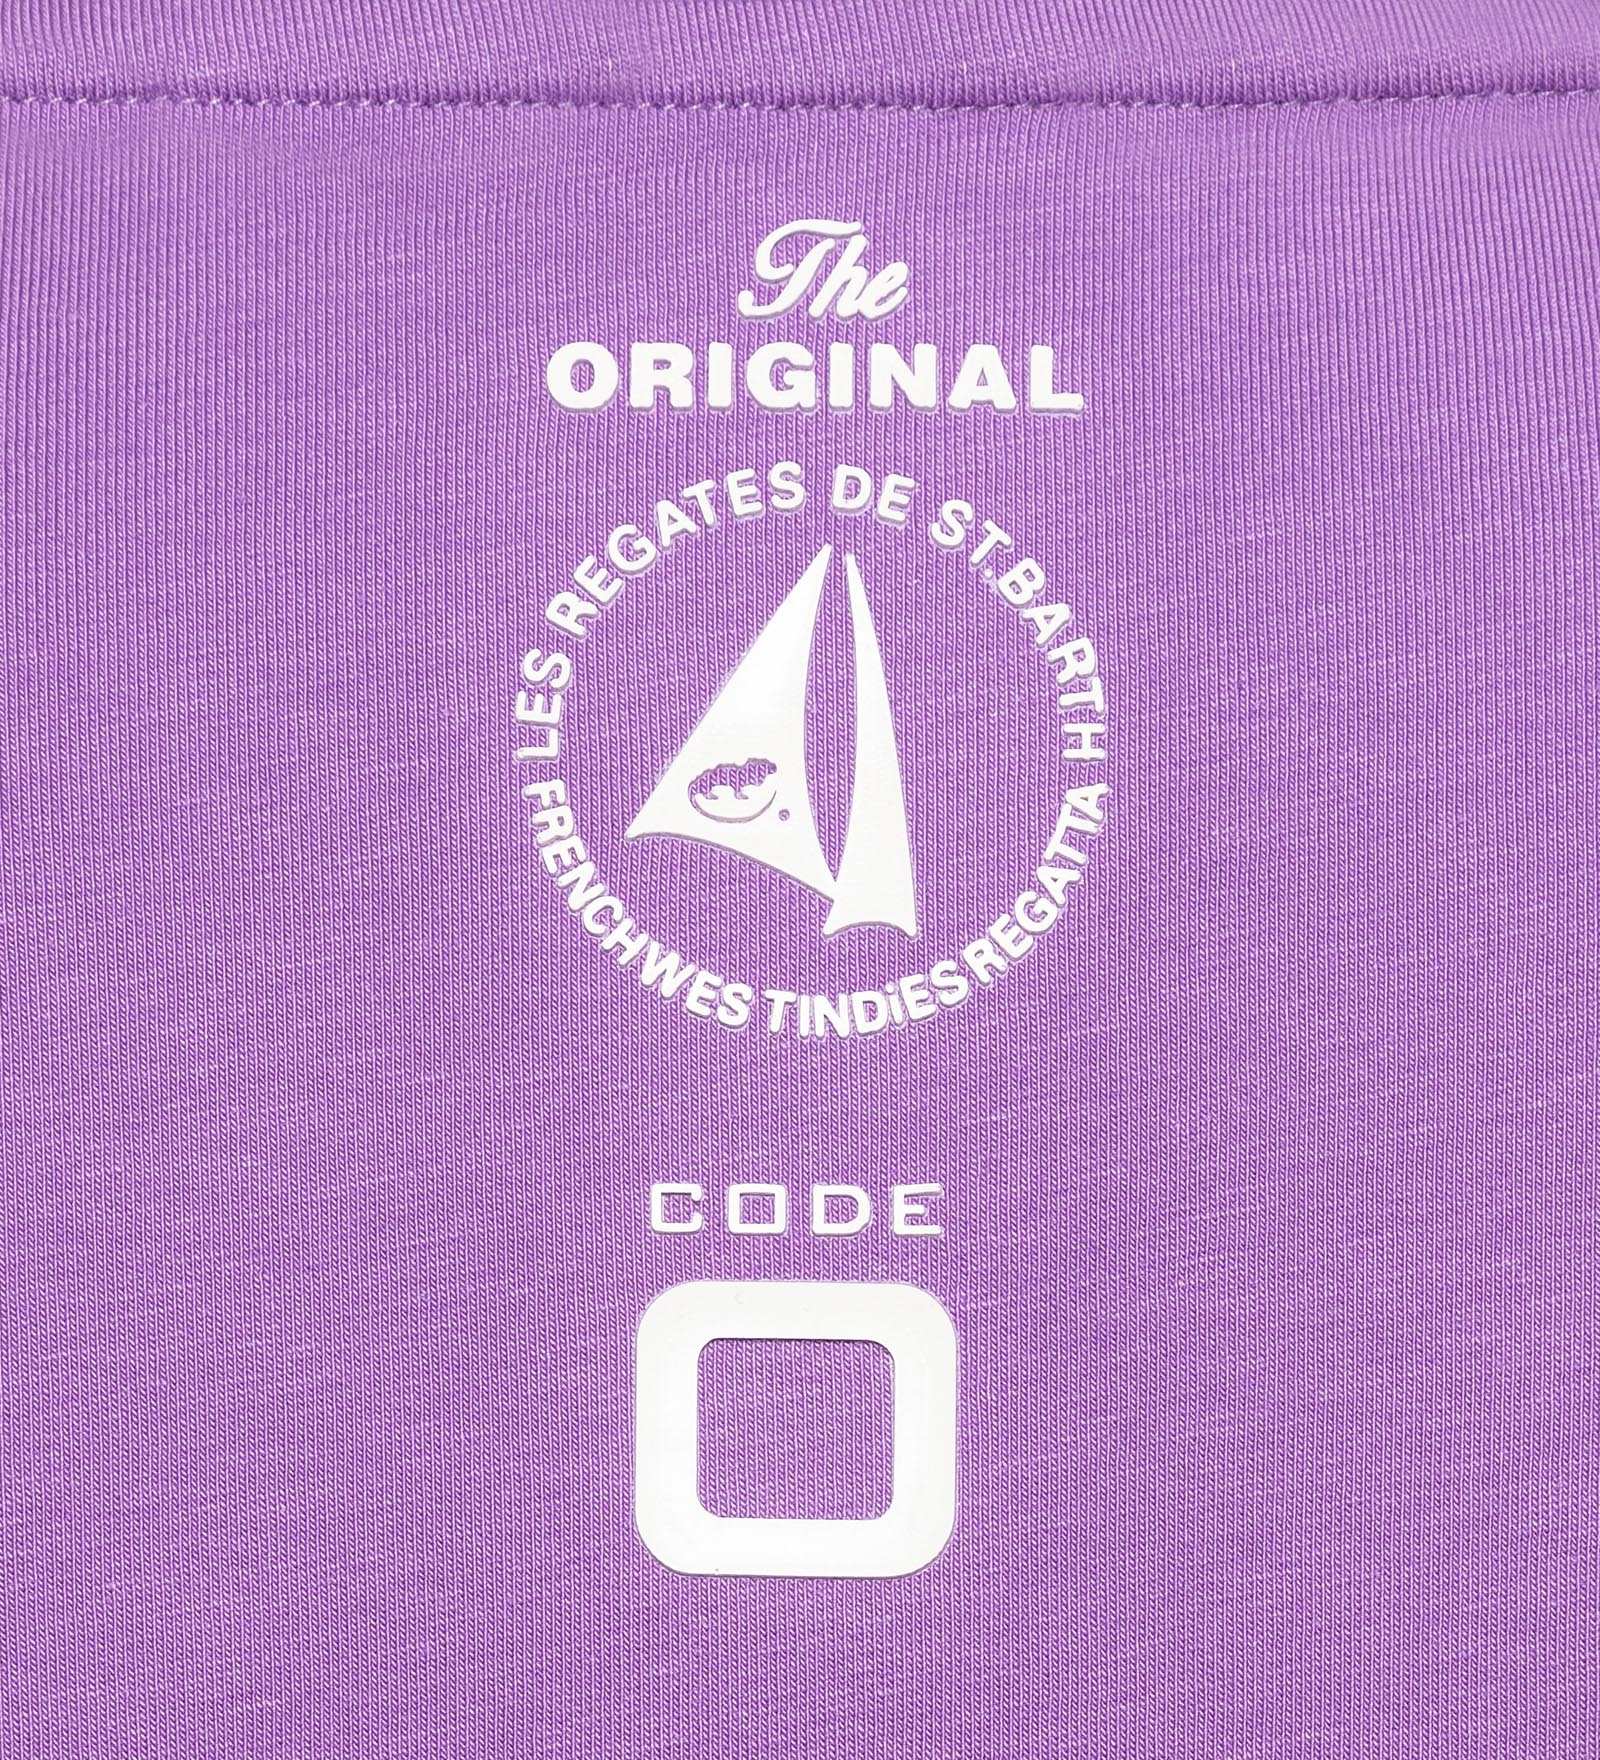 T-Shirt Lilac for Women 